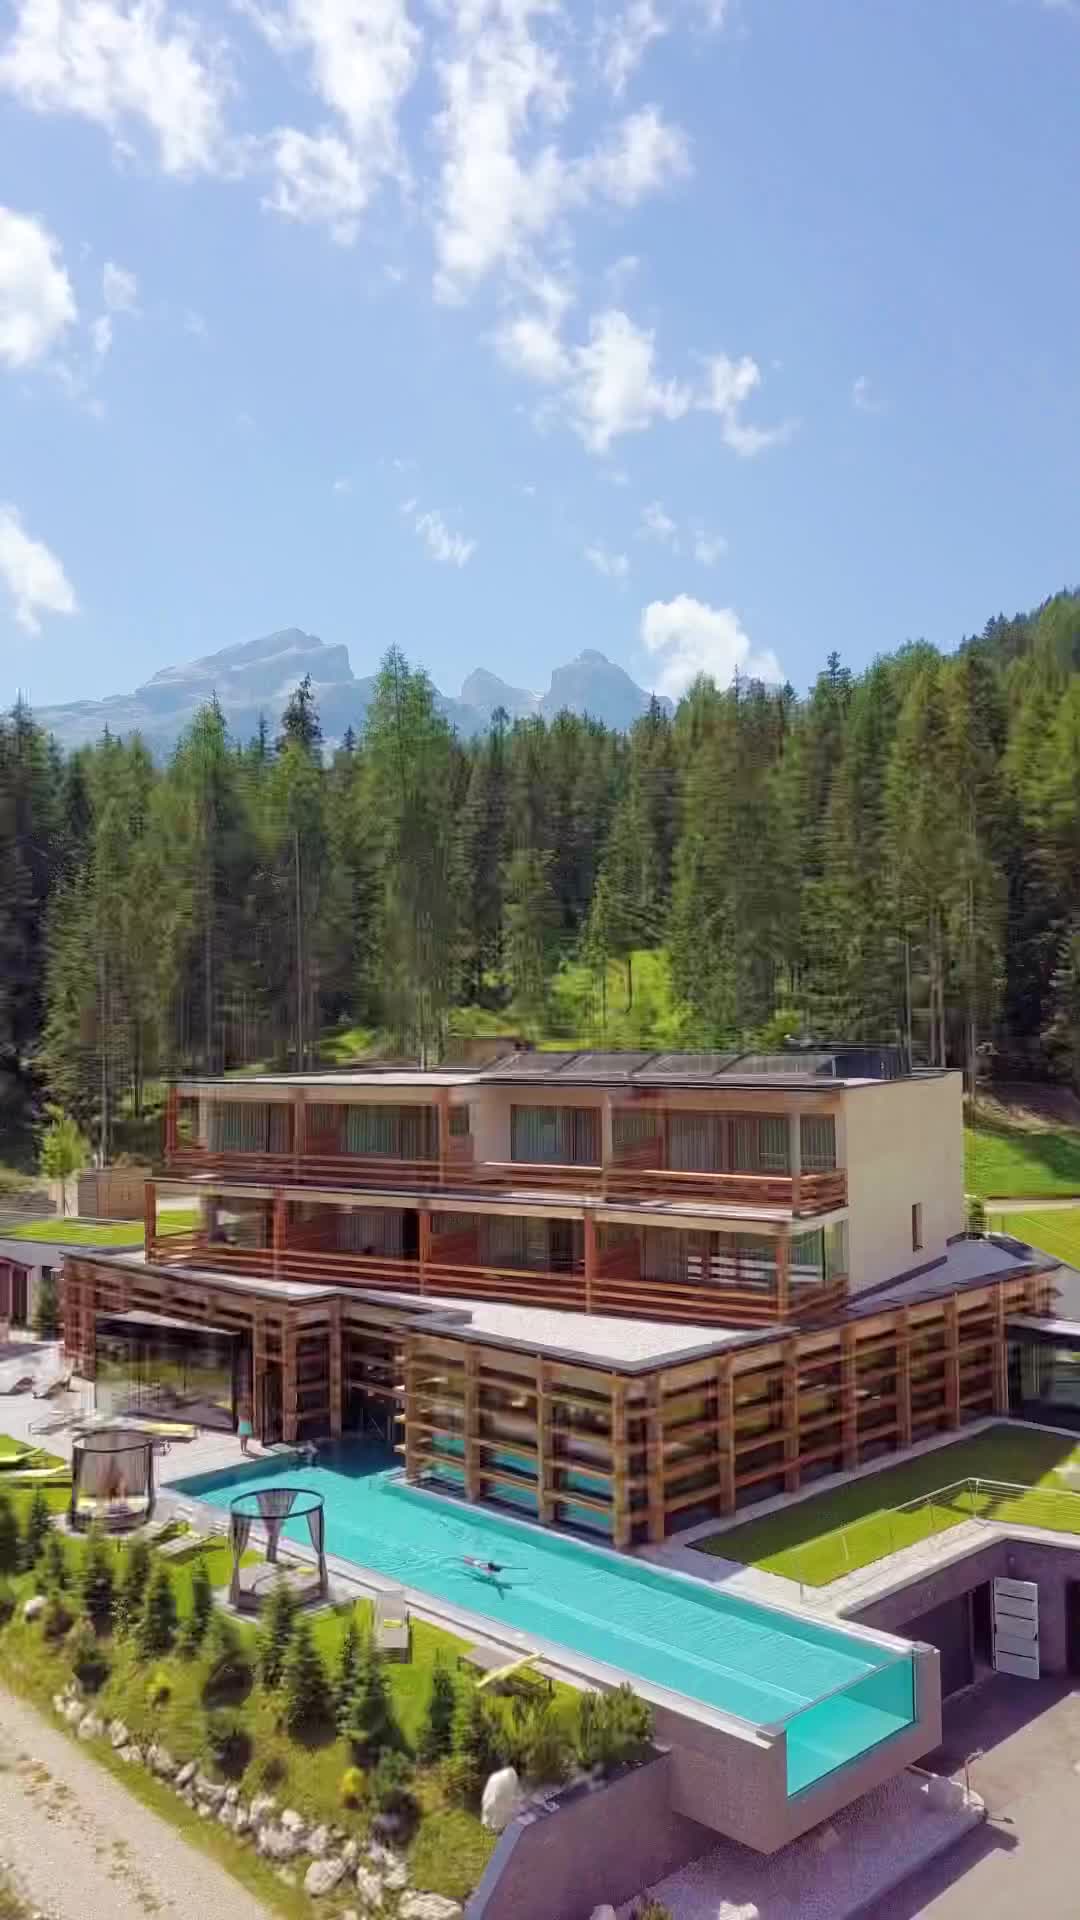 Discover Heaven at Hotel Cristallo in the Dolomites